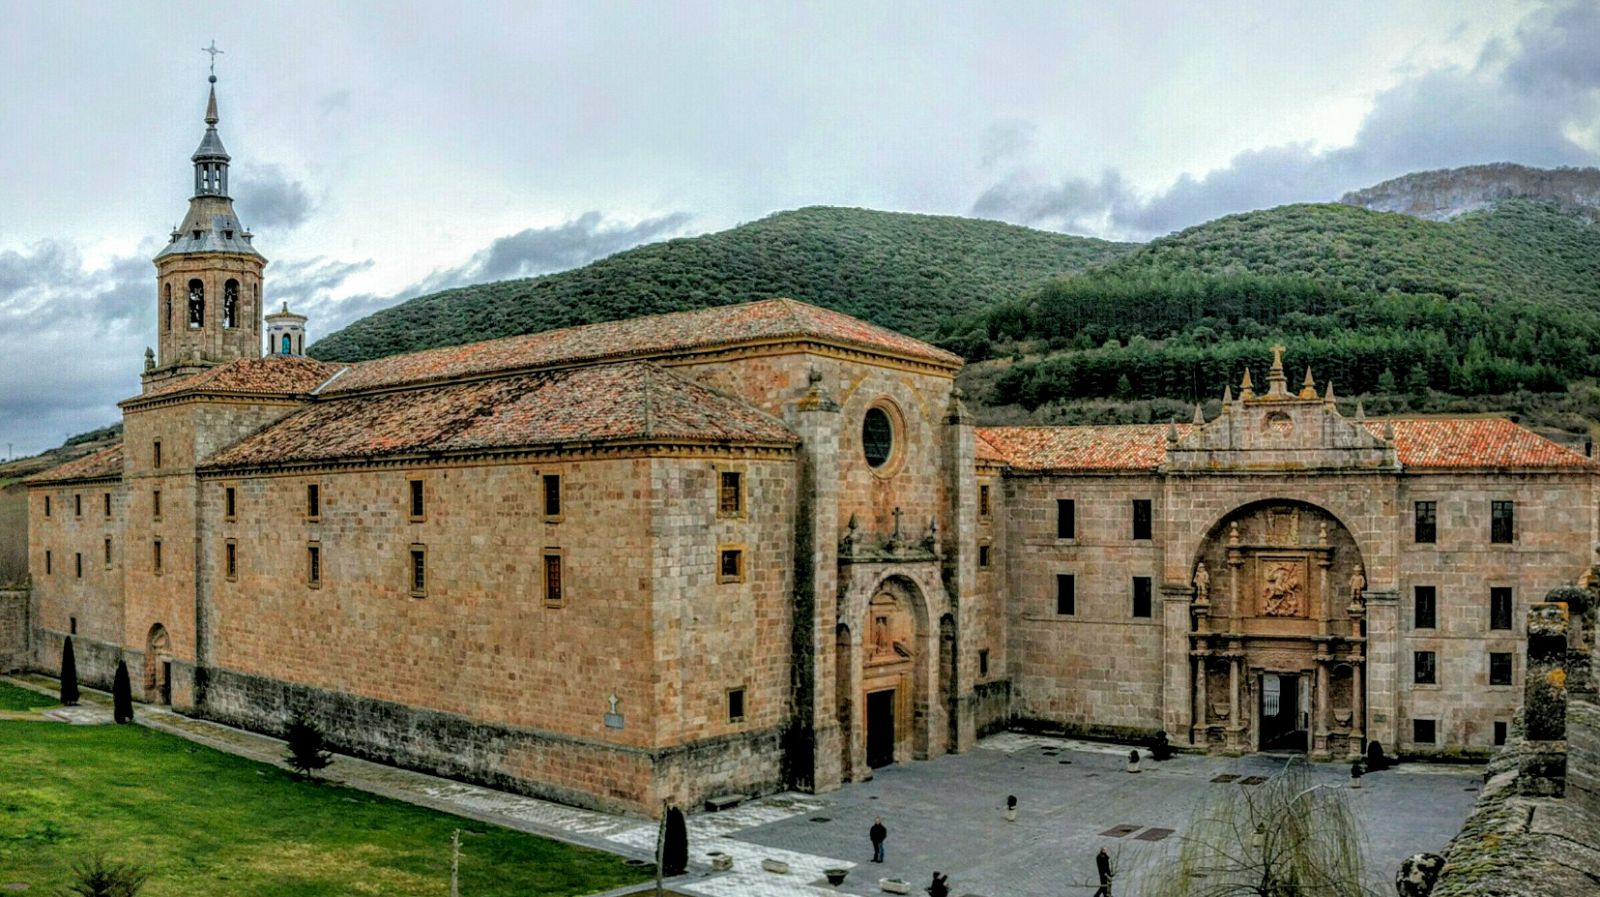 Real Monasterio de San Millán de Yuso